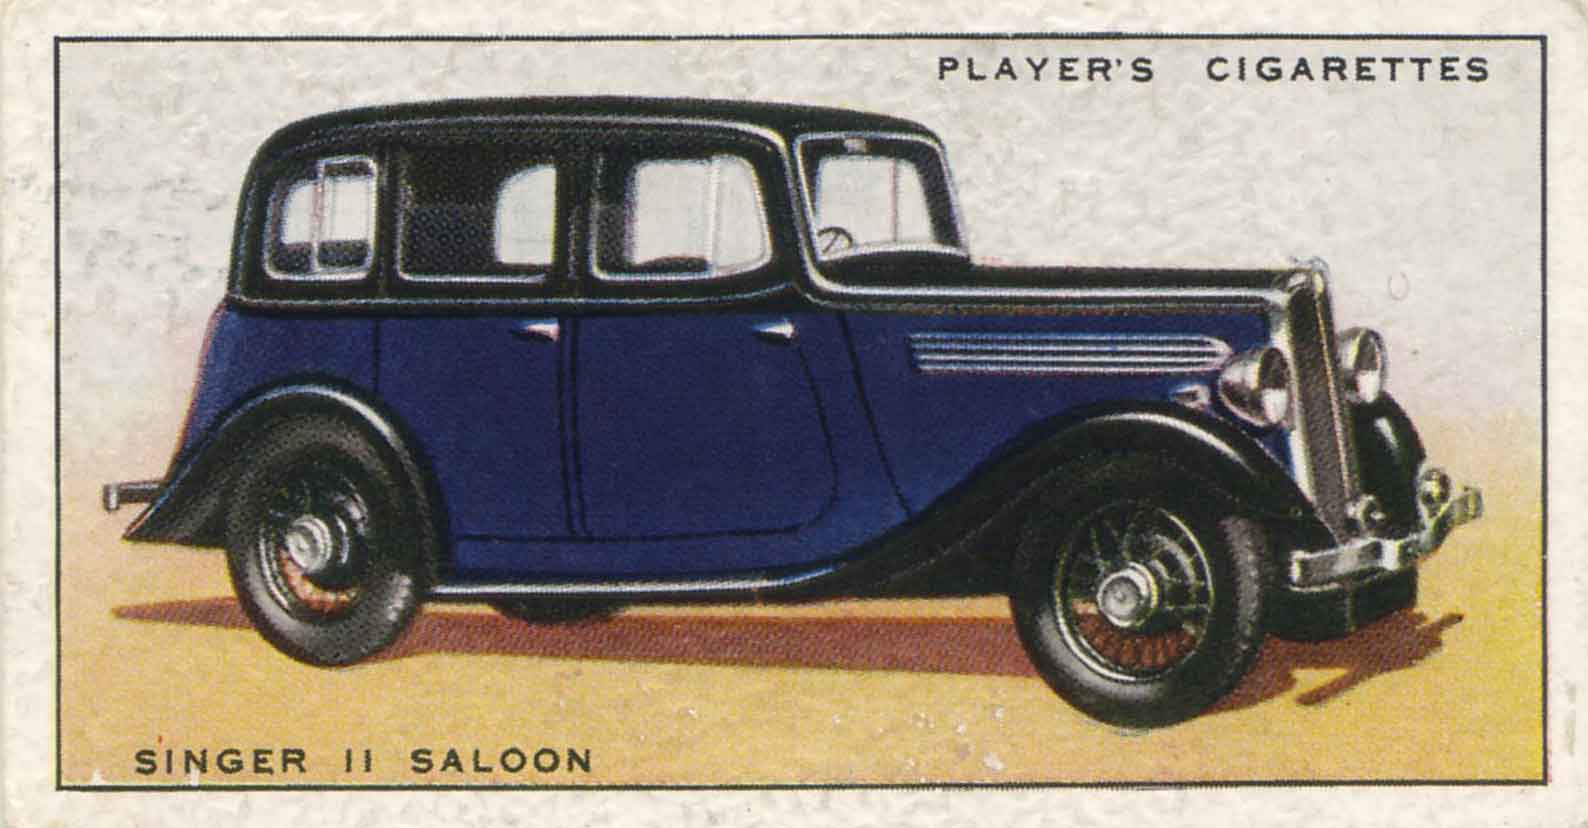 Singer II Saloon. 1937 cigarette card.